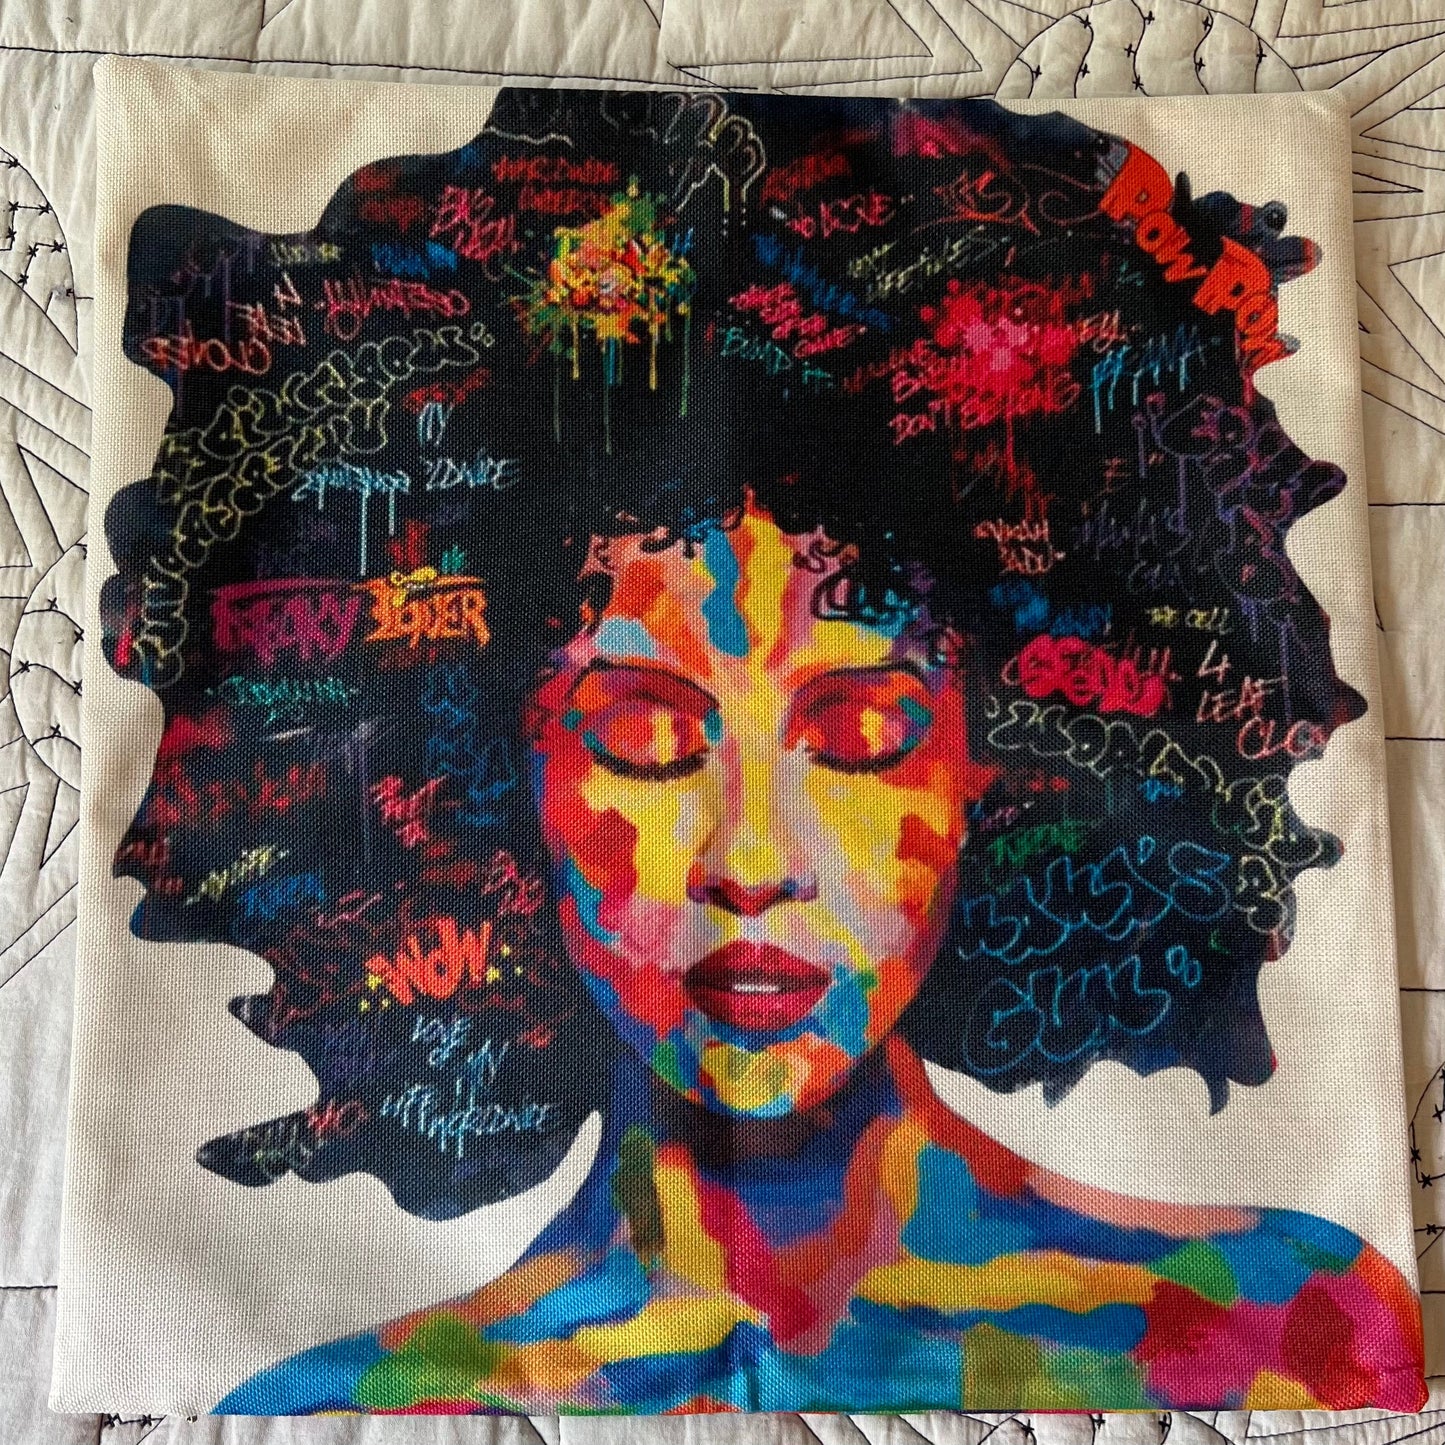 Black Girl Magic Pillow Cover